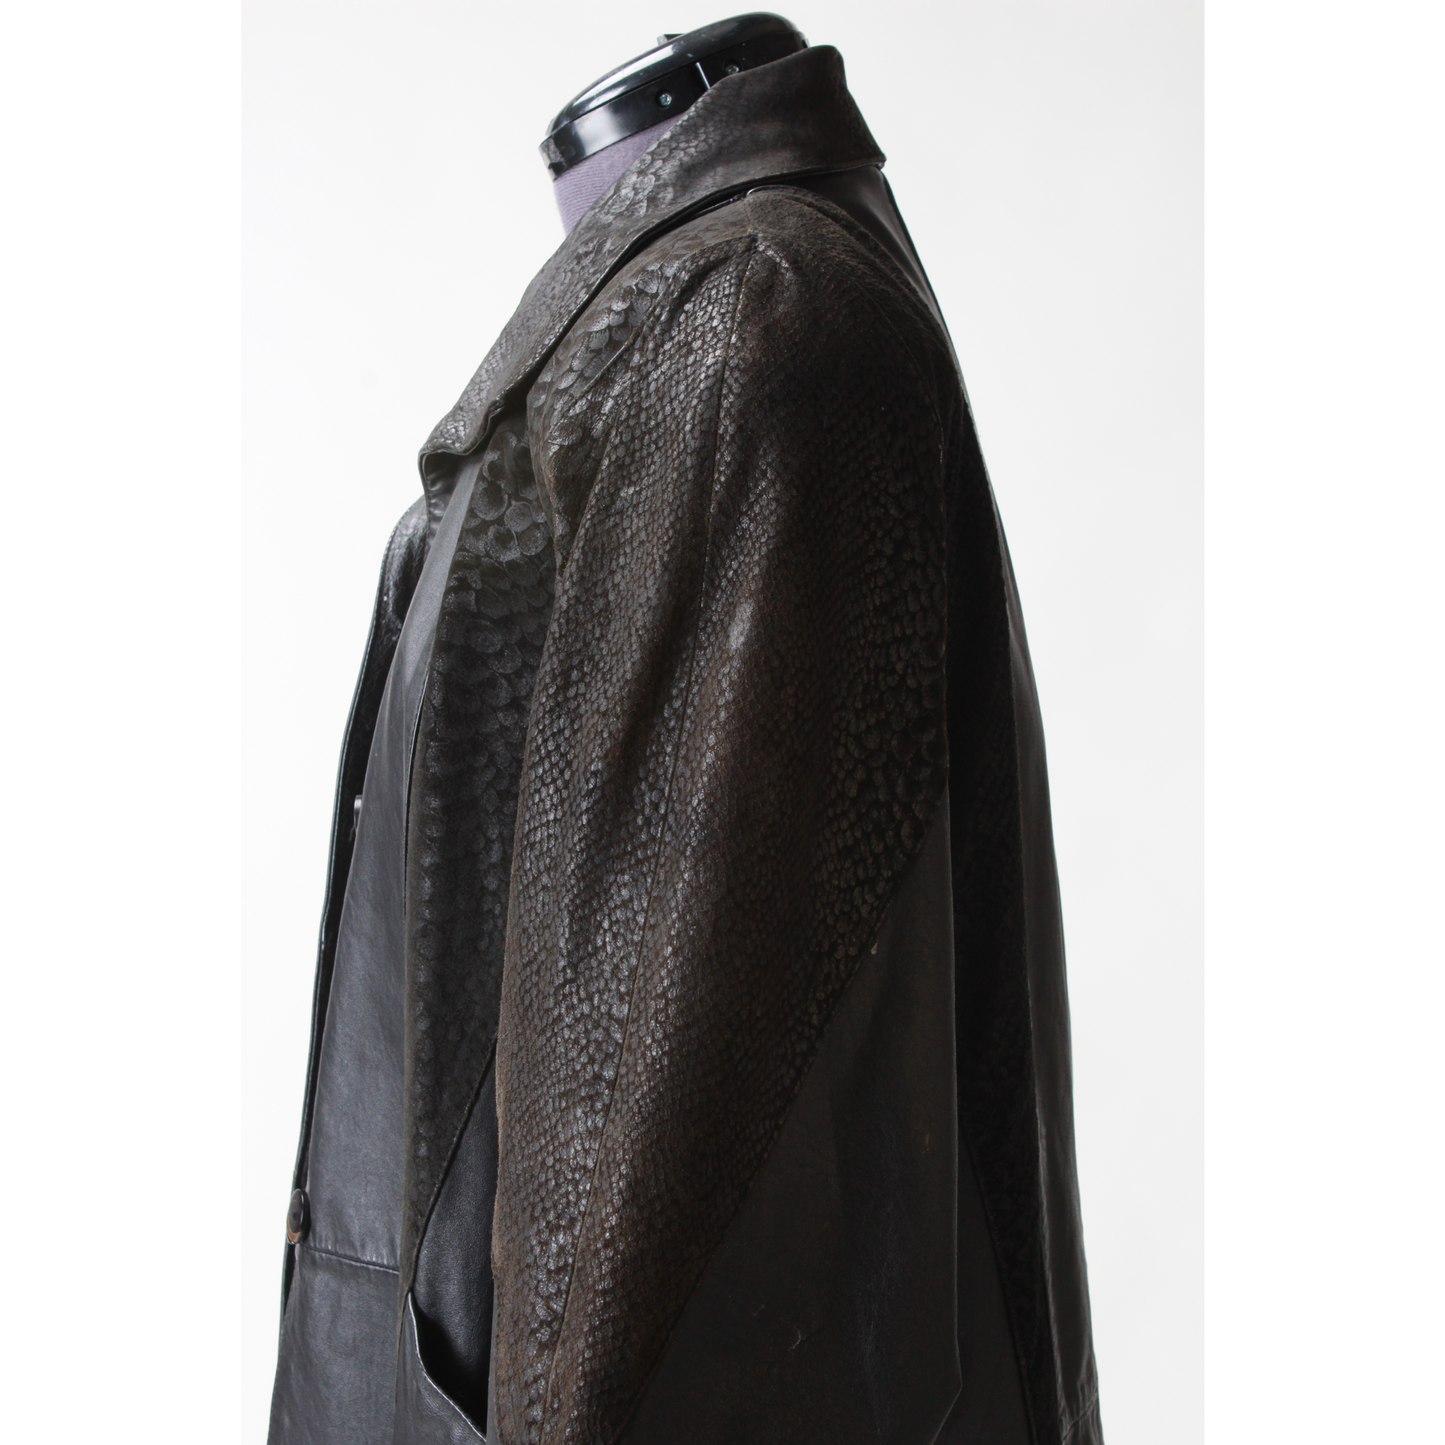 Black Leather/Suede Jacket